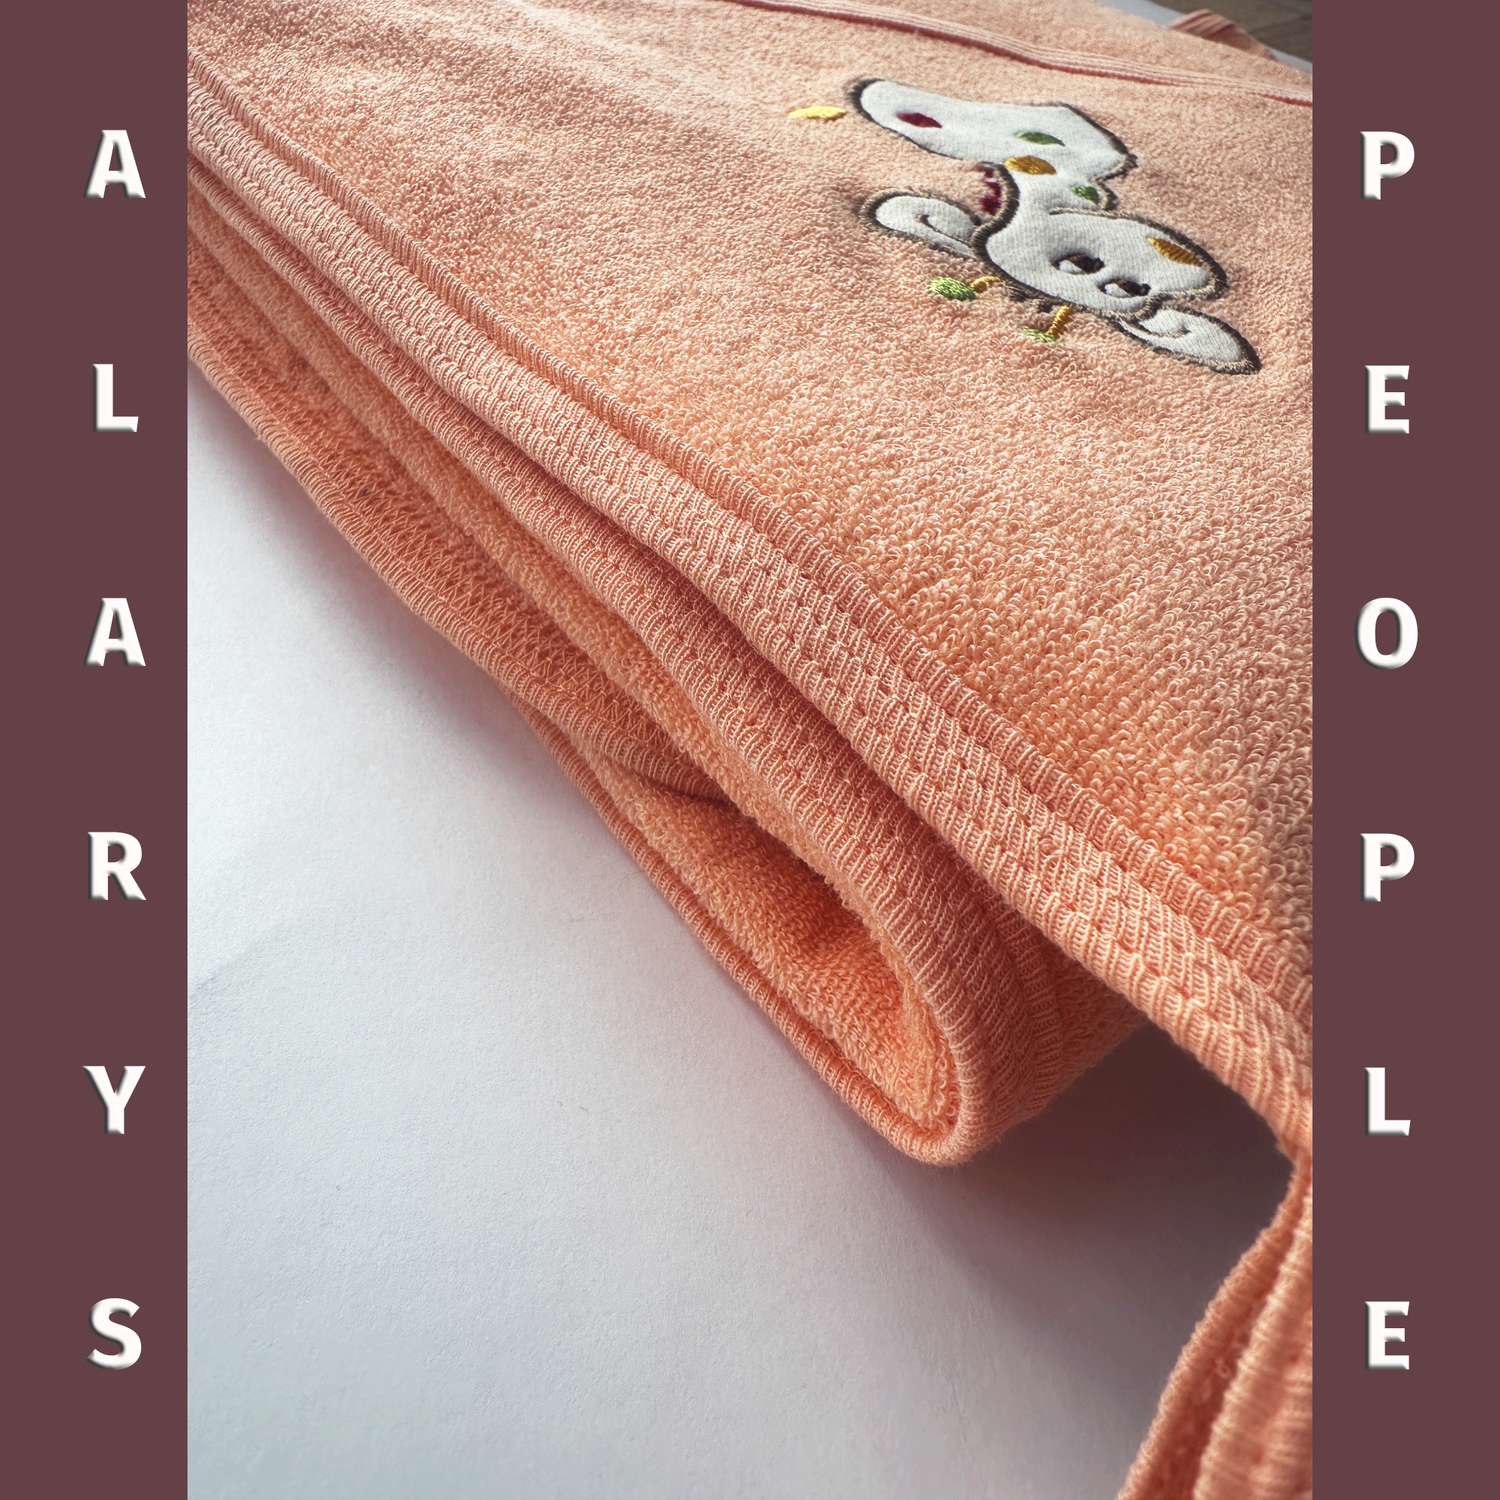 Набор для купания ALARYSPEOPLE пеленка-полотенце с уголком и рукавичка - фото 17